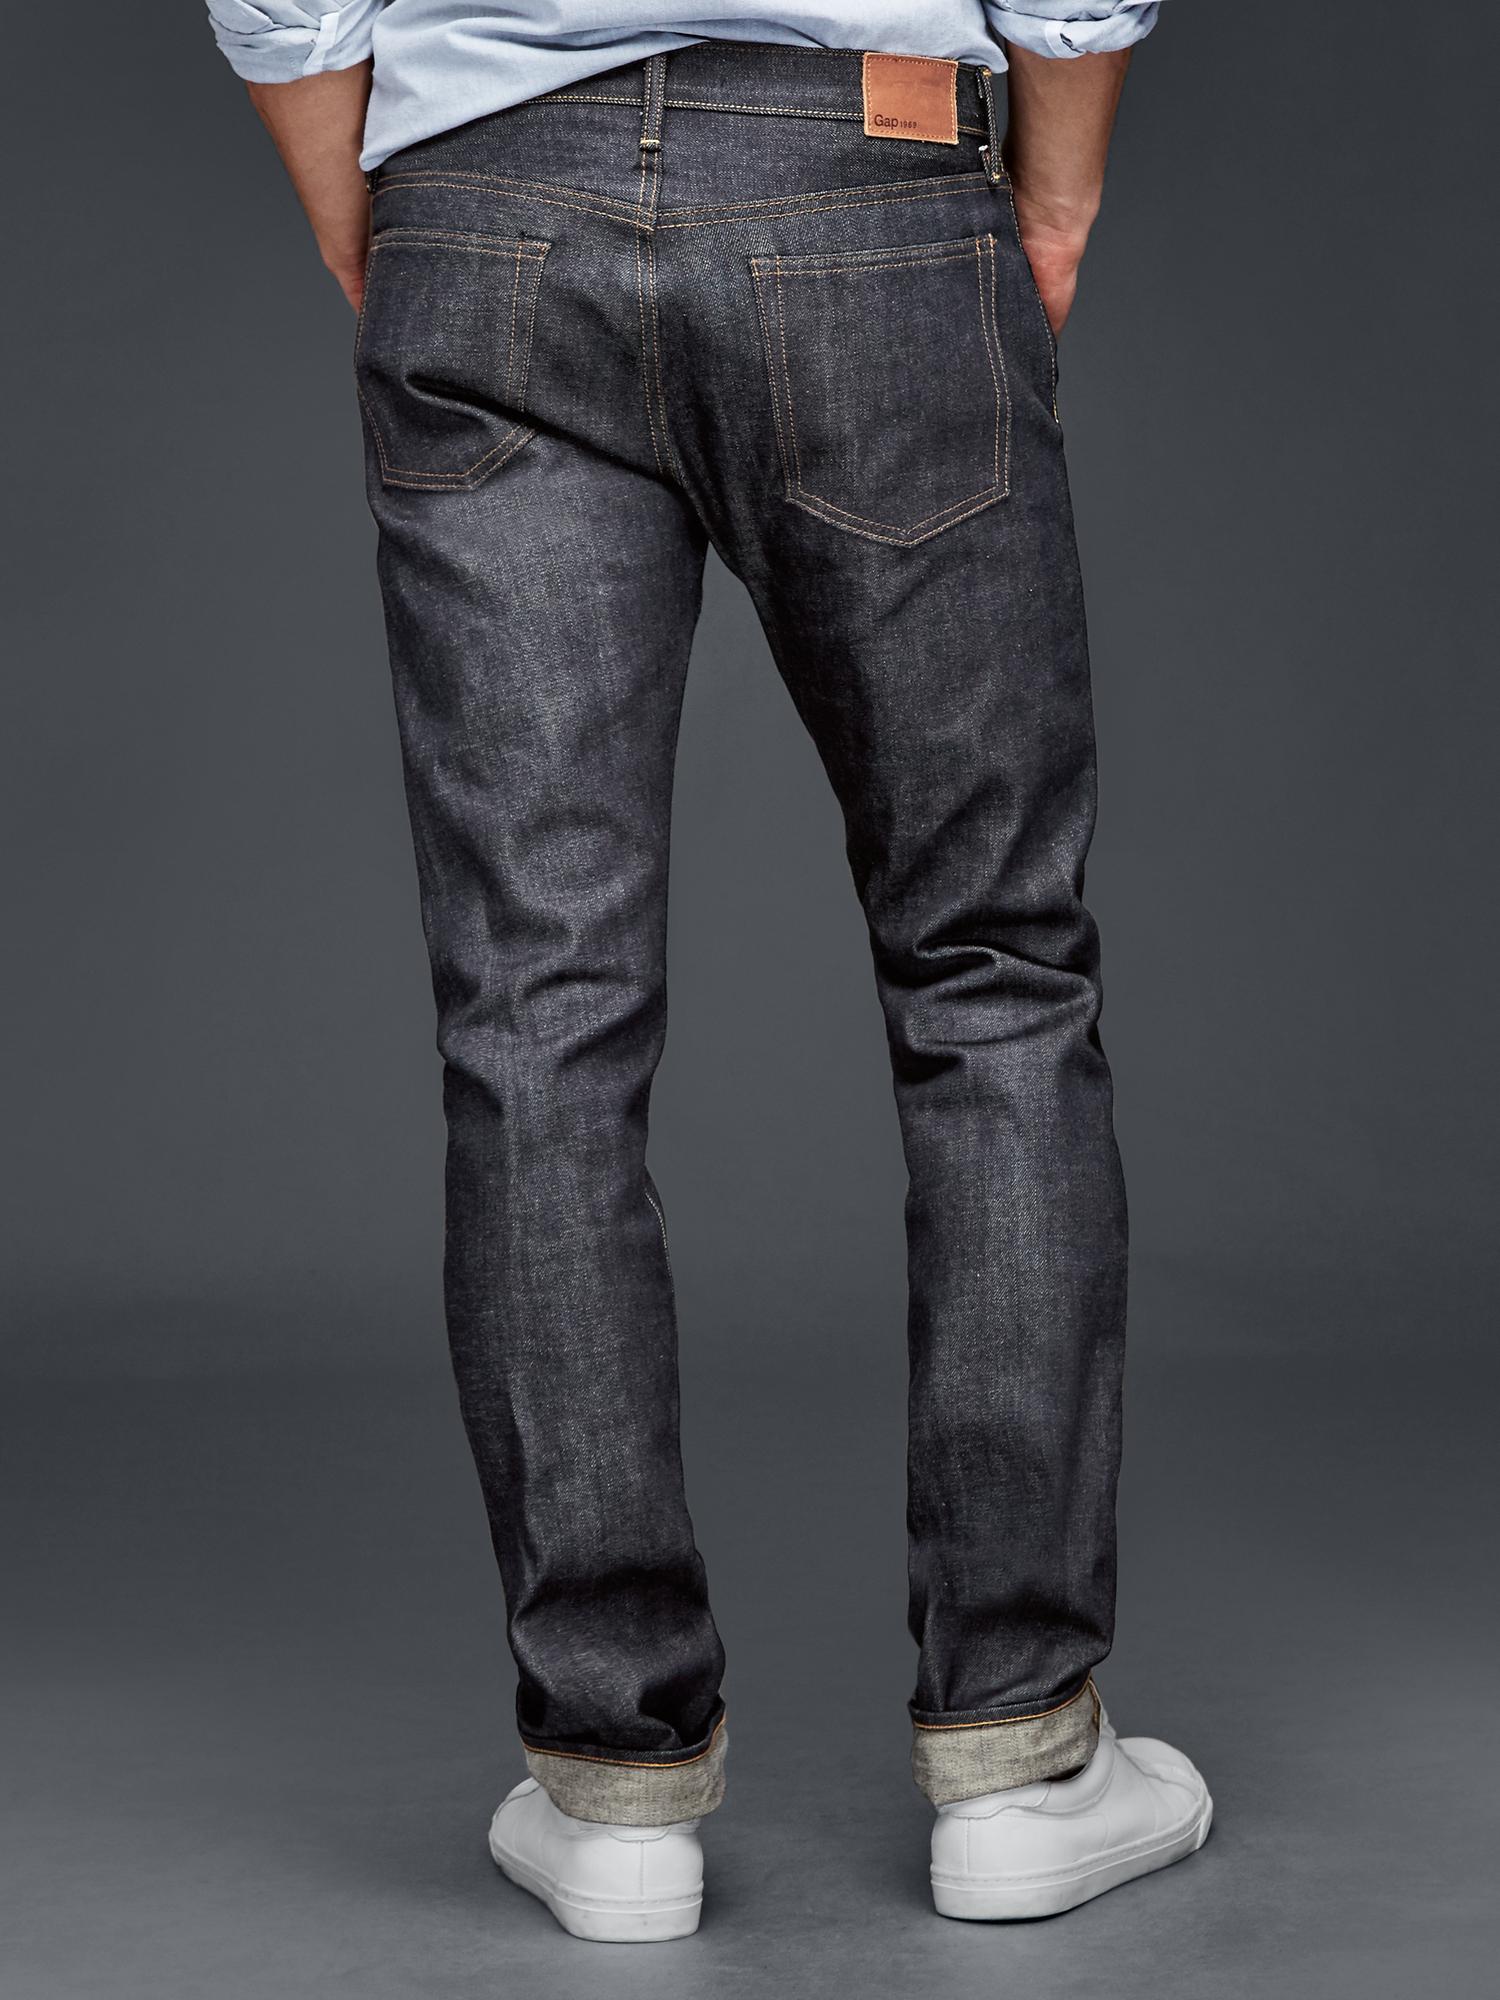 1969 Japanese selvedge slim fit jeans | Gap